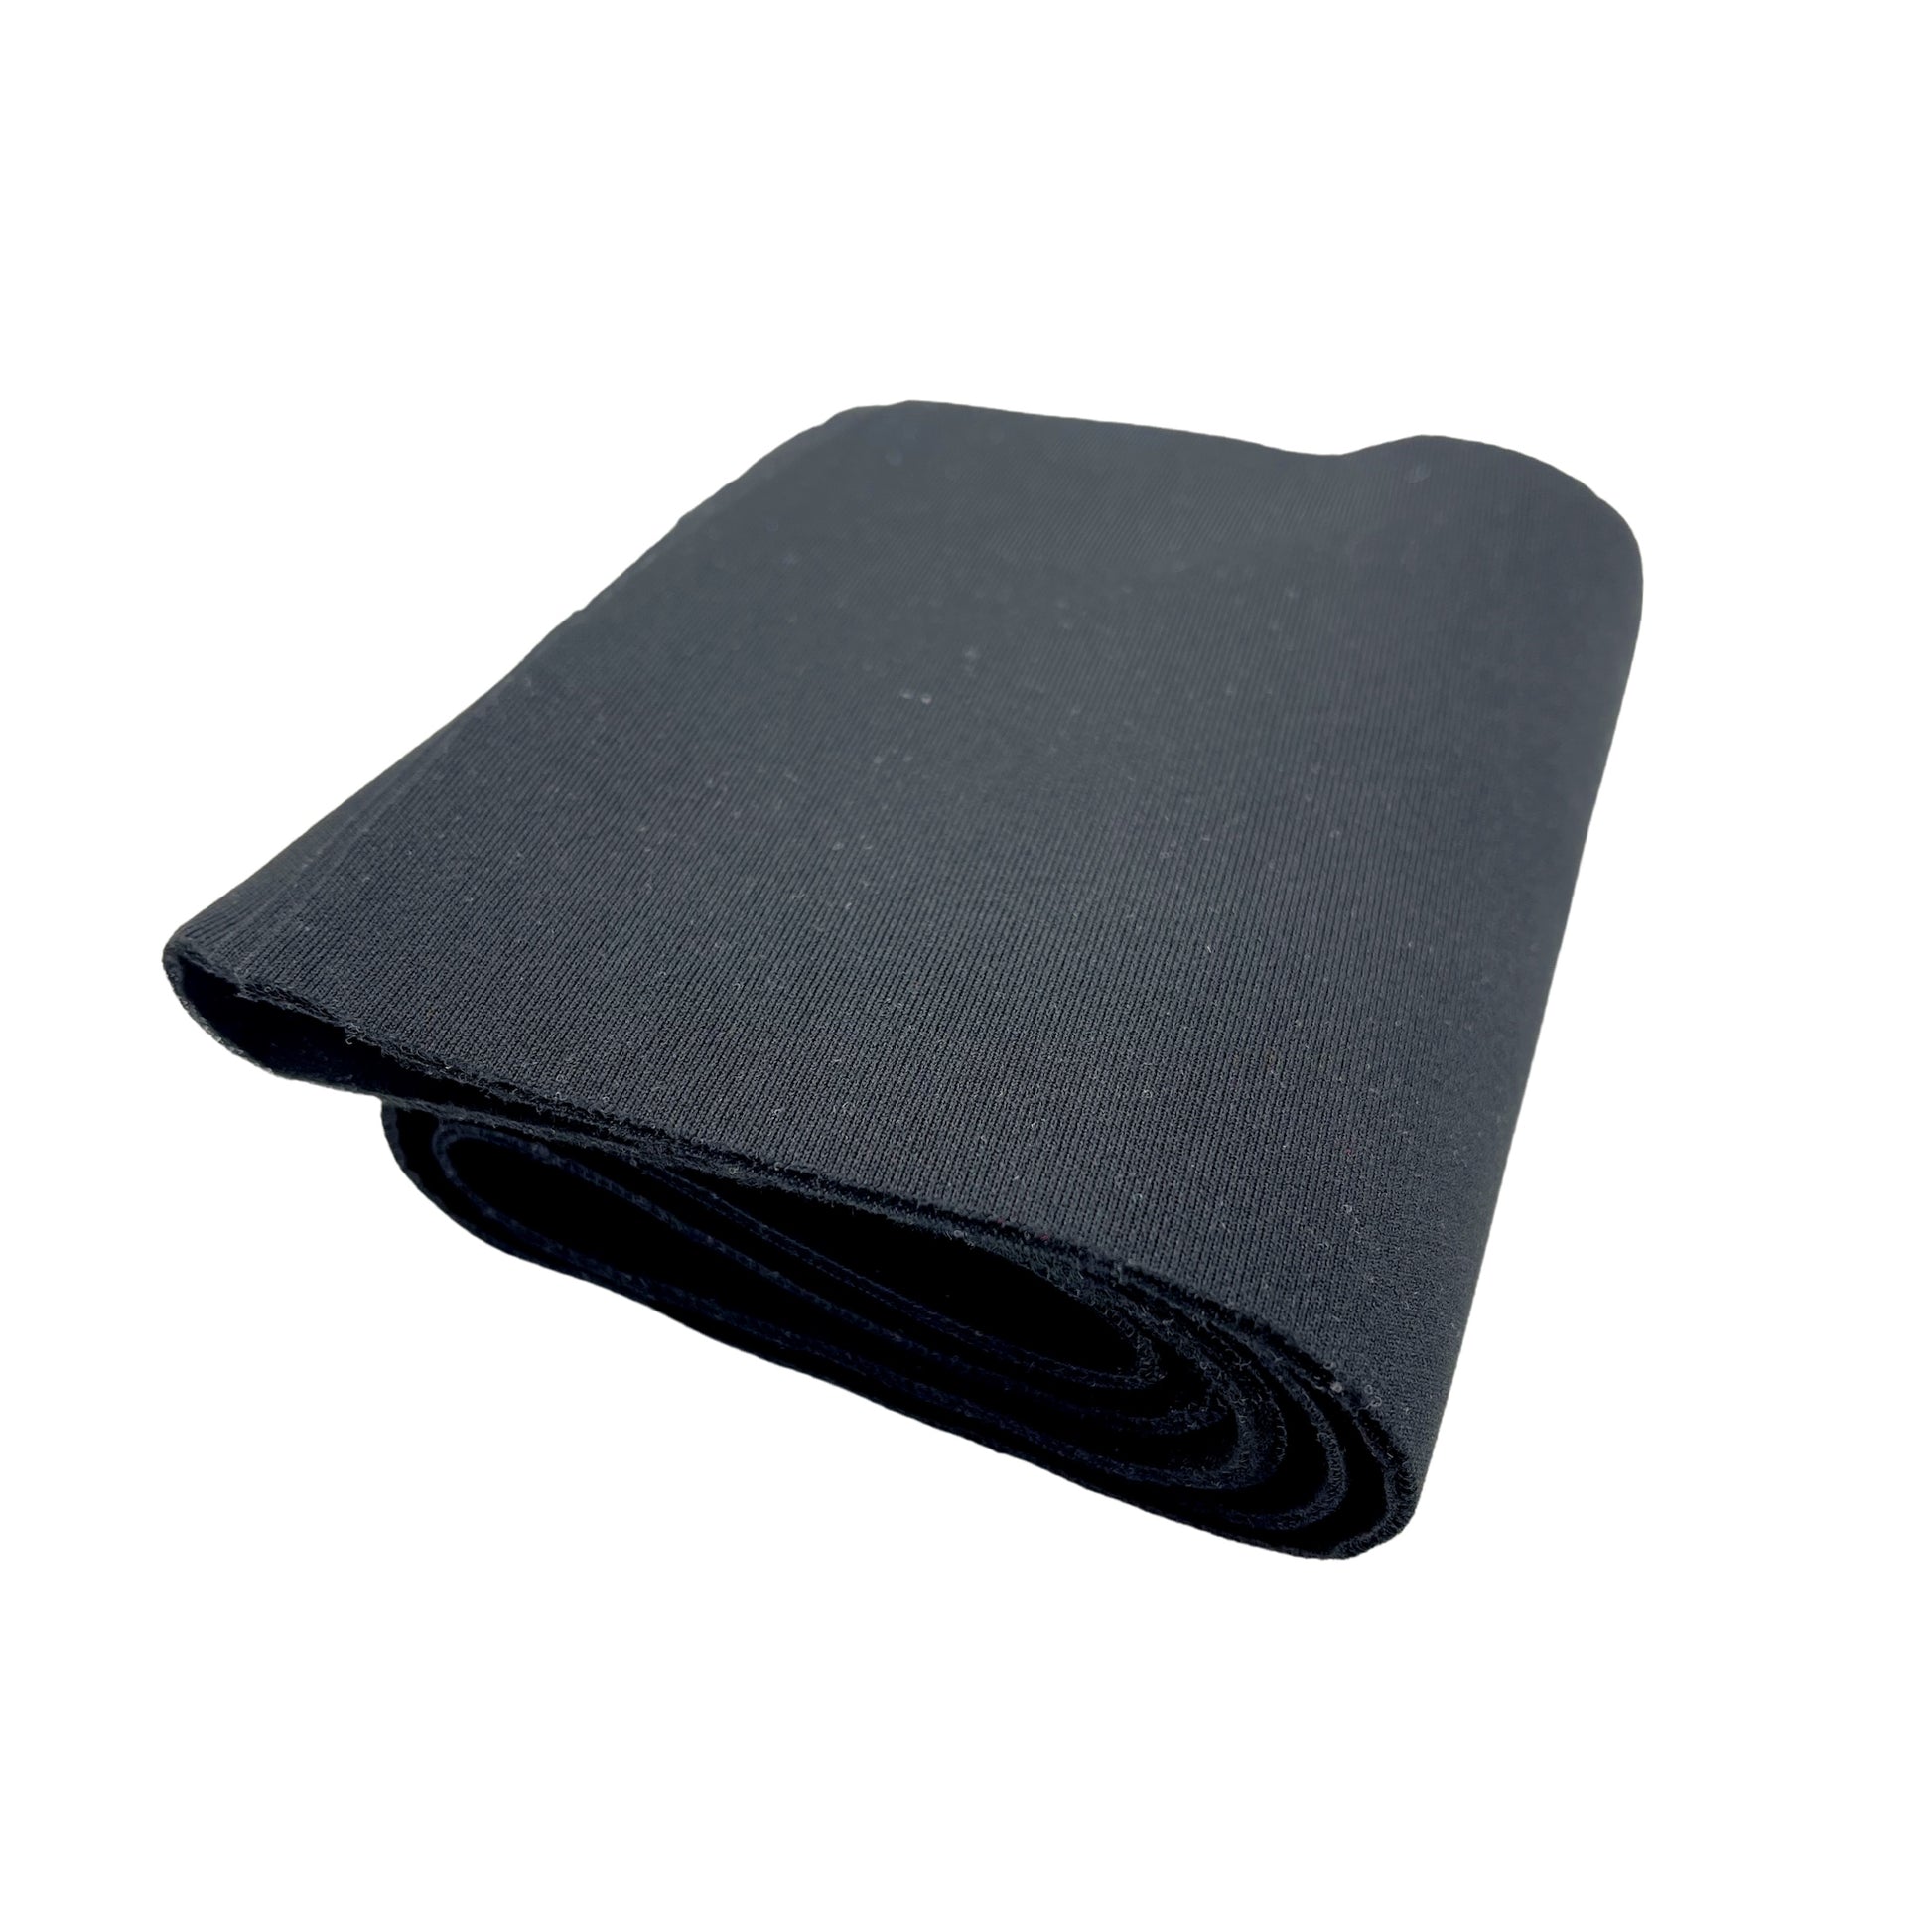 Black folded padded neoprene fabric strip.